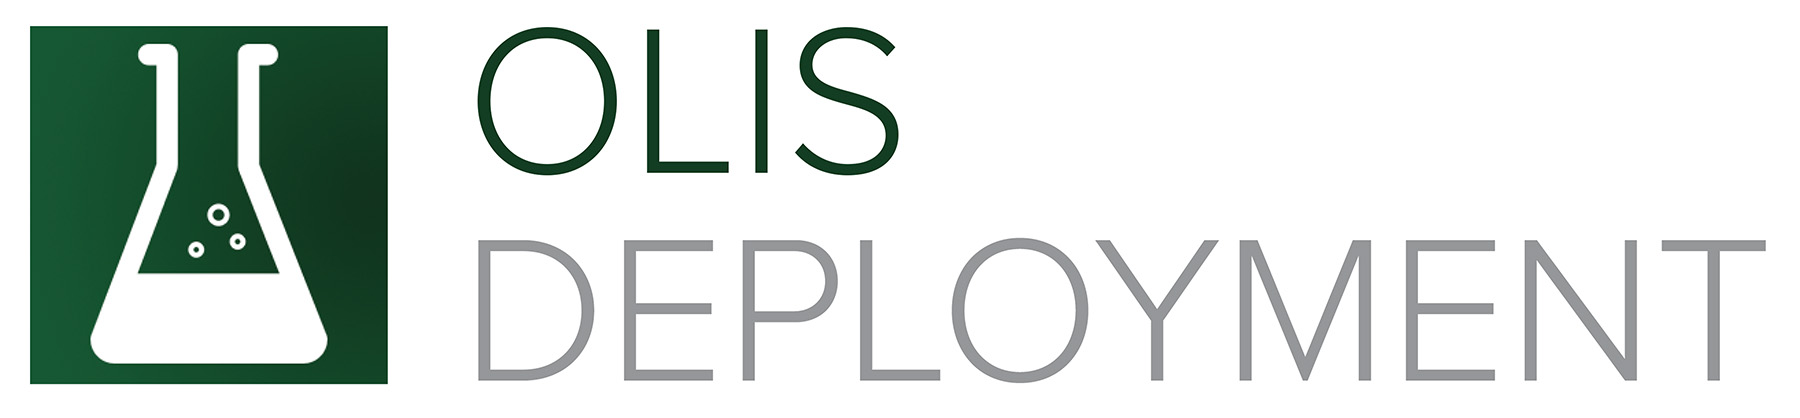 OLIS Deployment Logo.jpg